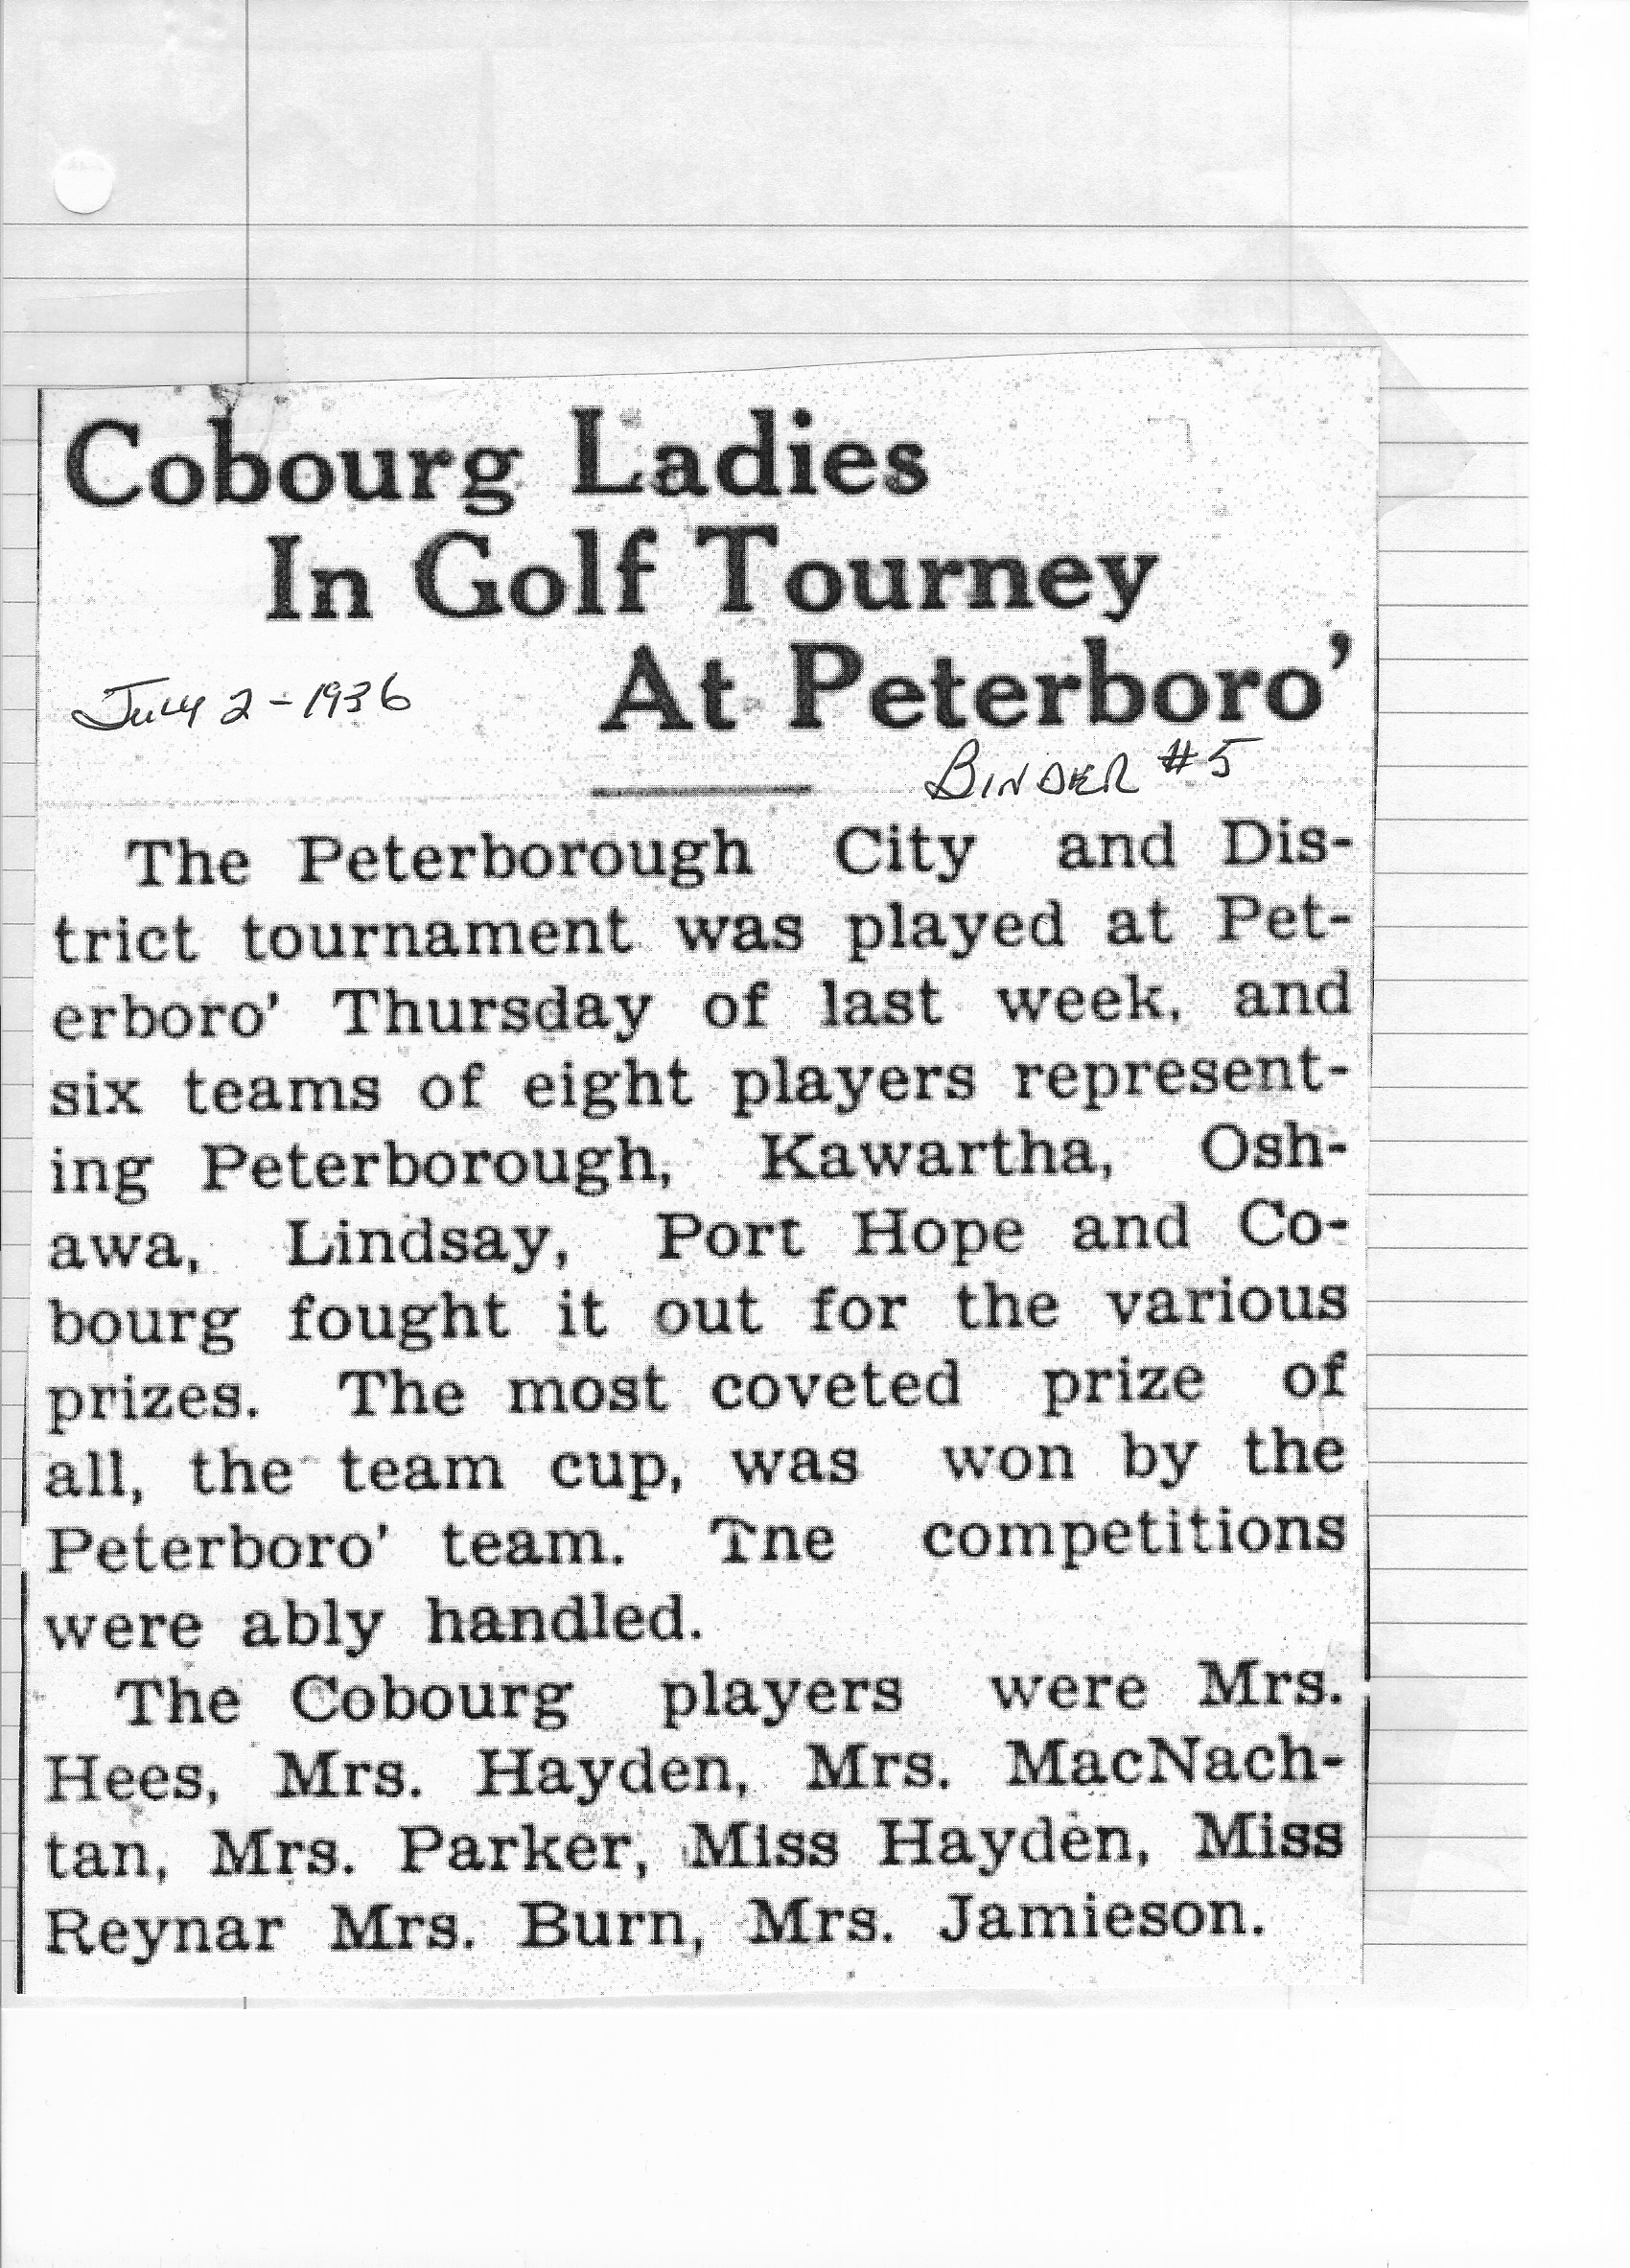 1936-07-02 Golf -Ladies vs Ptbo